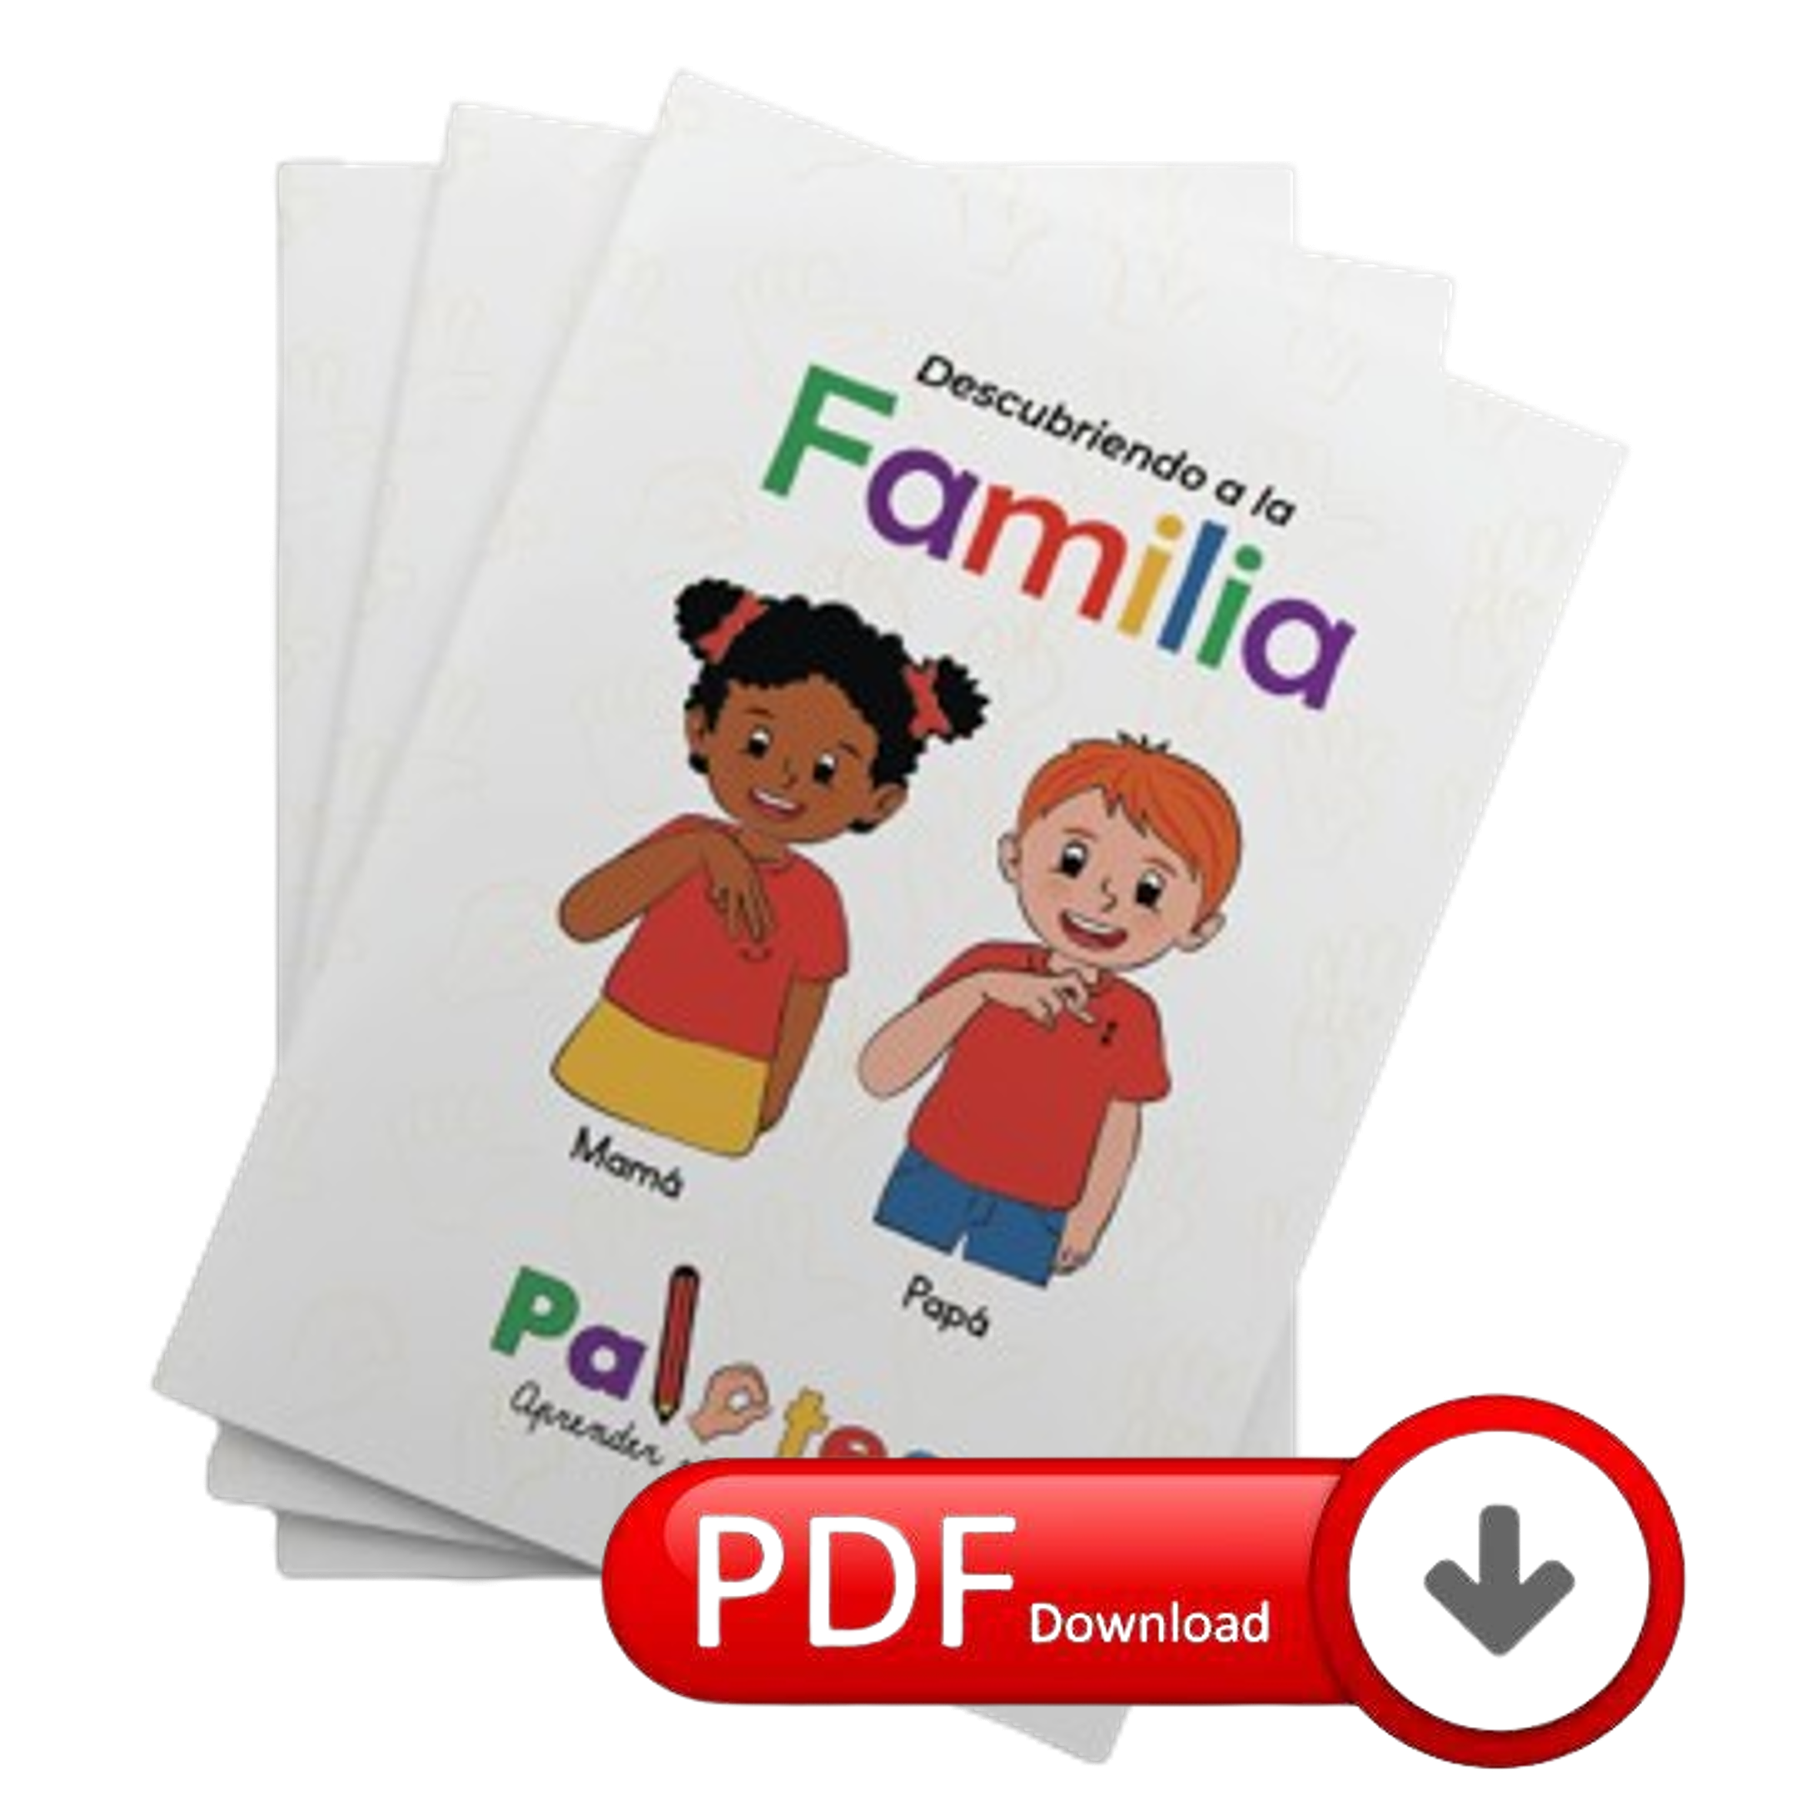 Cuadernillo Para Aprender Lengua De Señas Chilena - DESCUBRIENDO A LA FAMILIA PDF